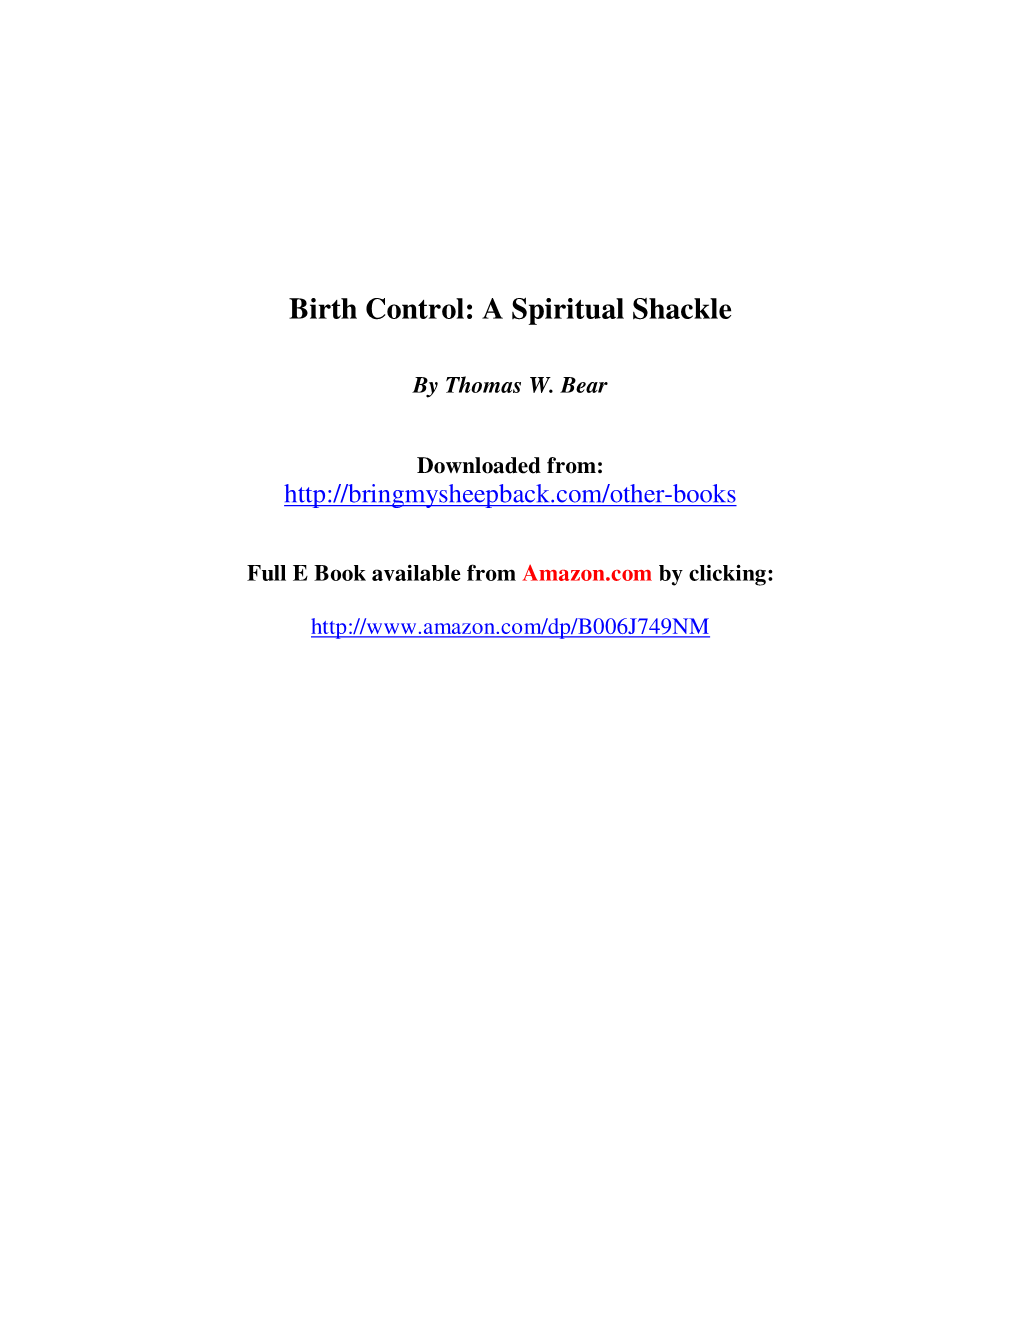 Birth Control: a Spiritual Shackle